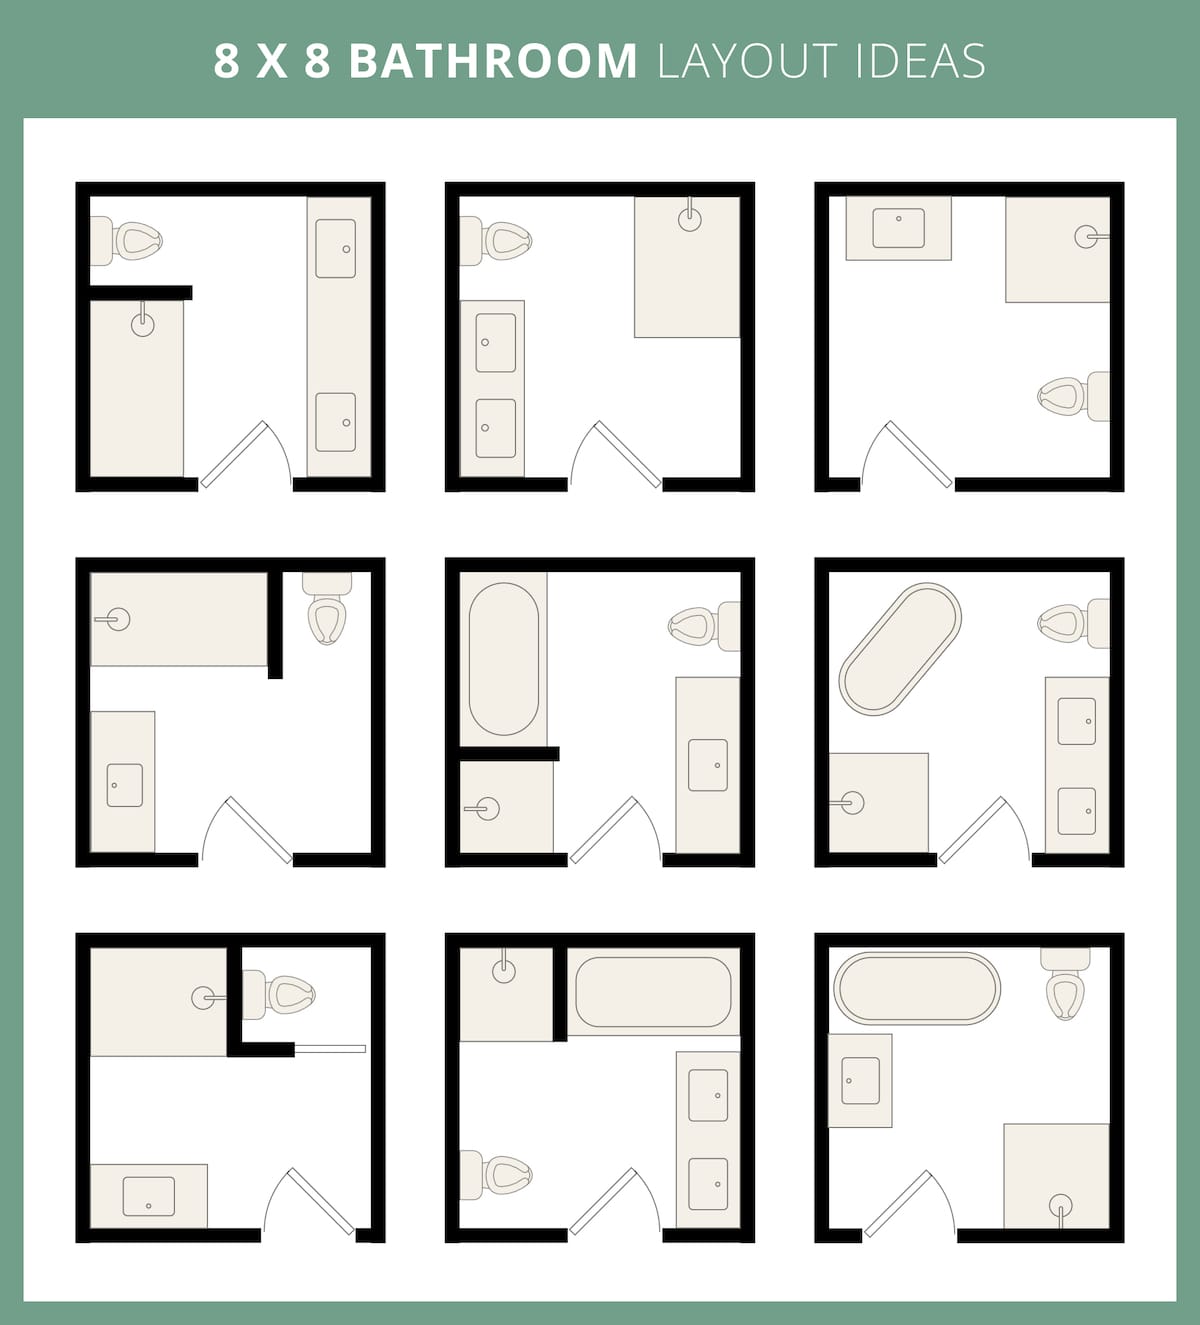 8x8 bathroom layout ideas with floor plan